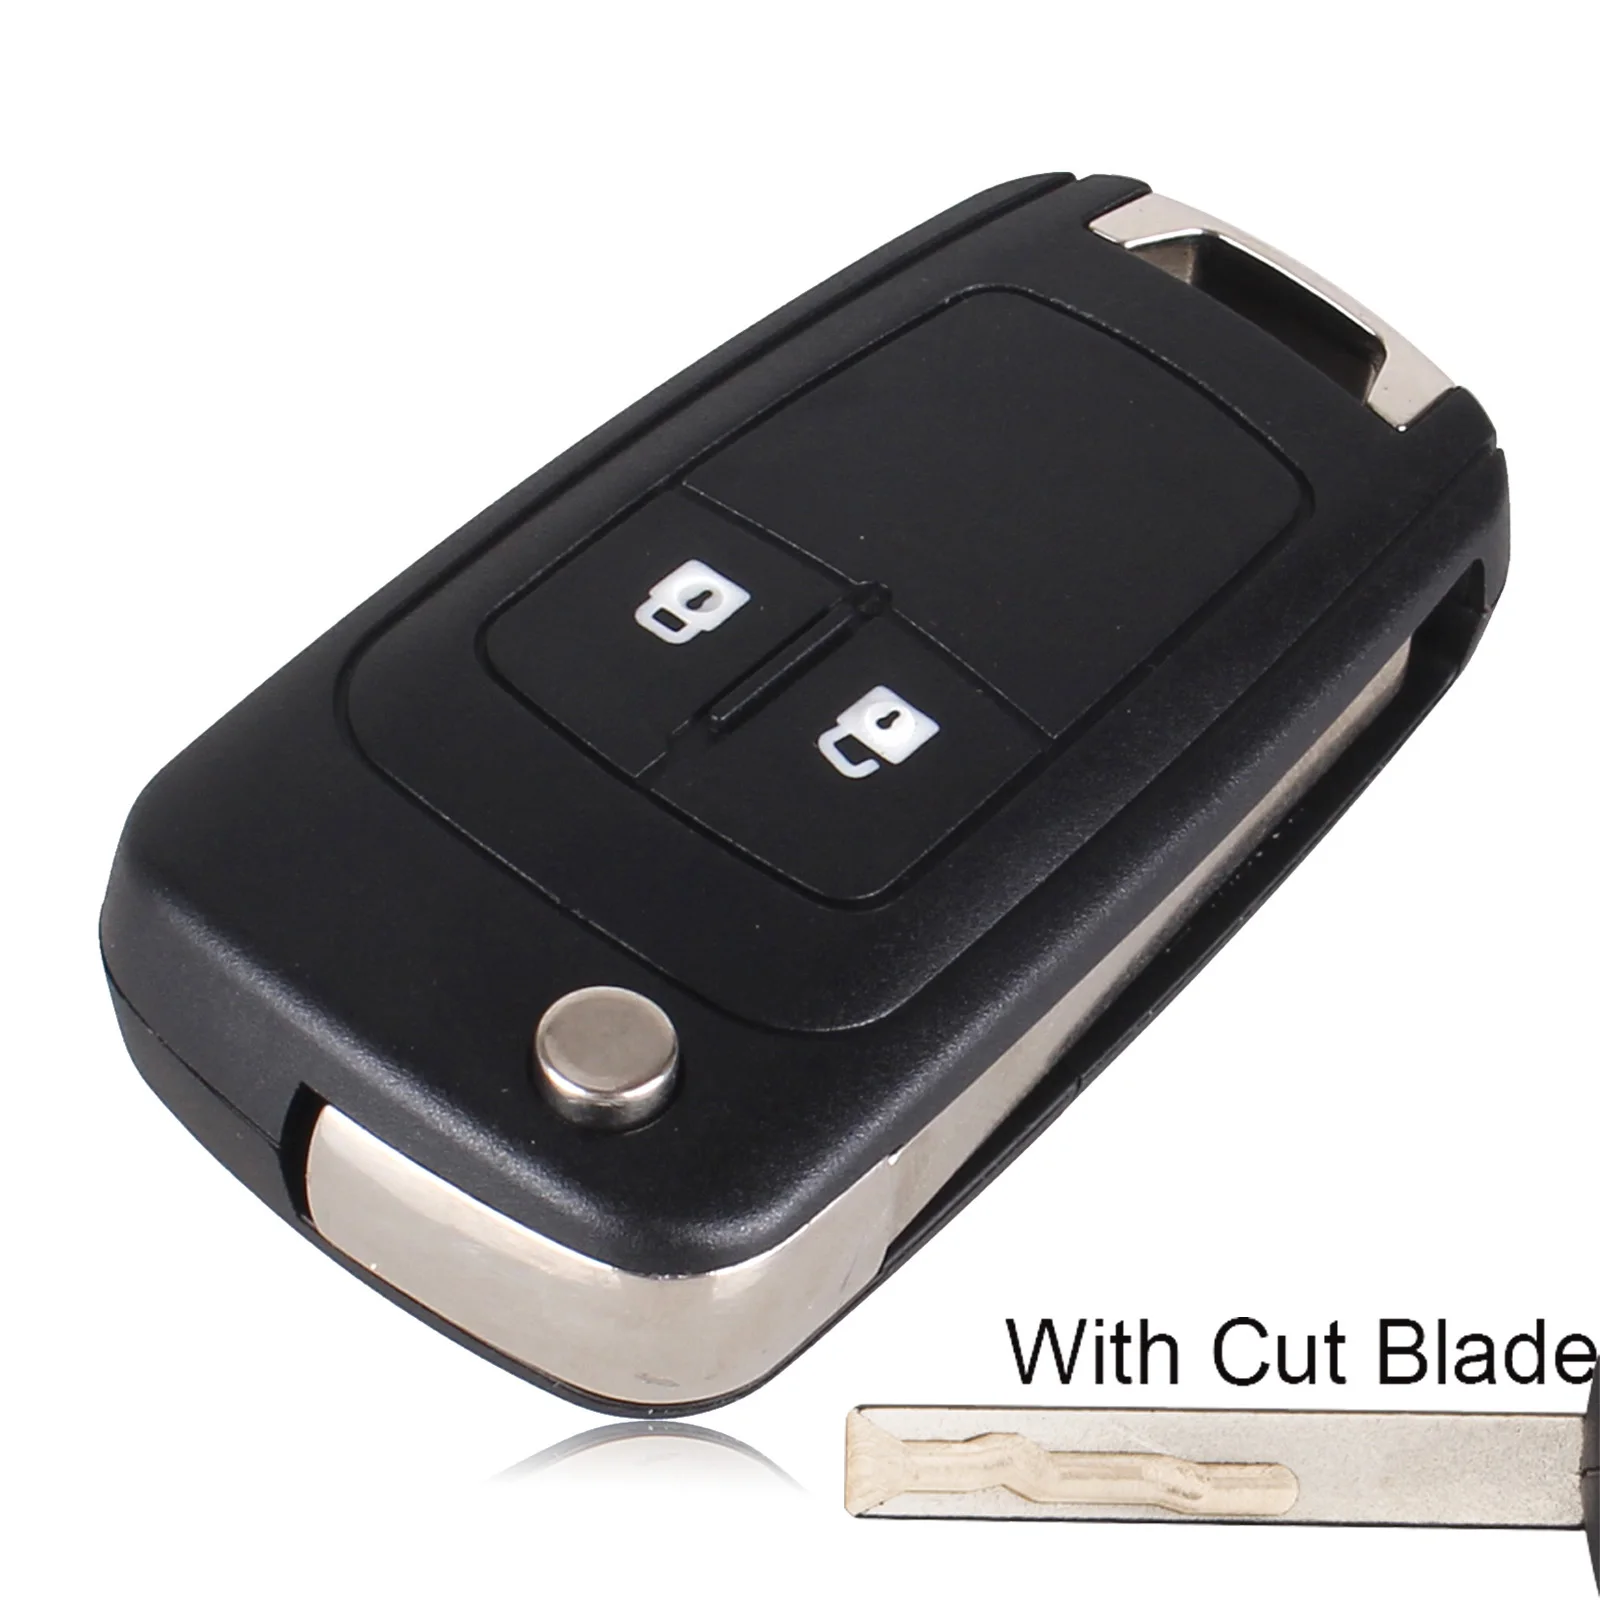 KEYYOU cut/uncut blade откидной складной чехол для ключей для Chevrolet Camaro/Cruze/Equinox/Impala/Malibu/Sonic HU100 Blade - Цвет: 2 B cut